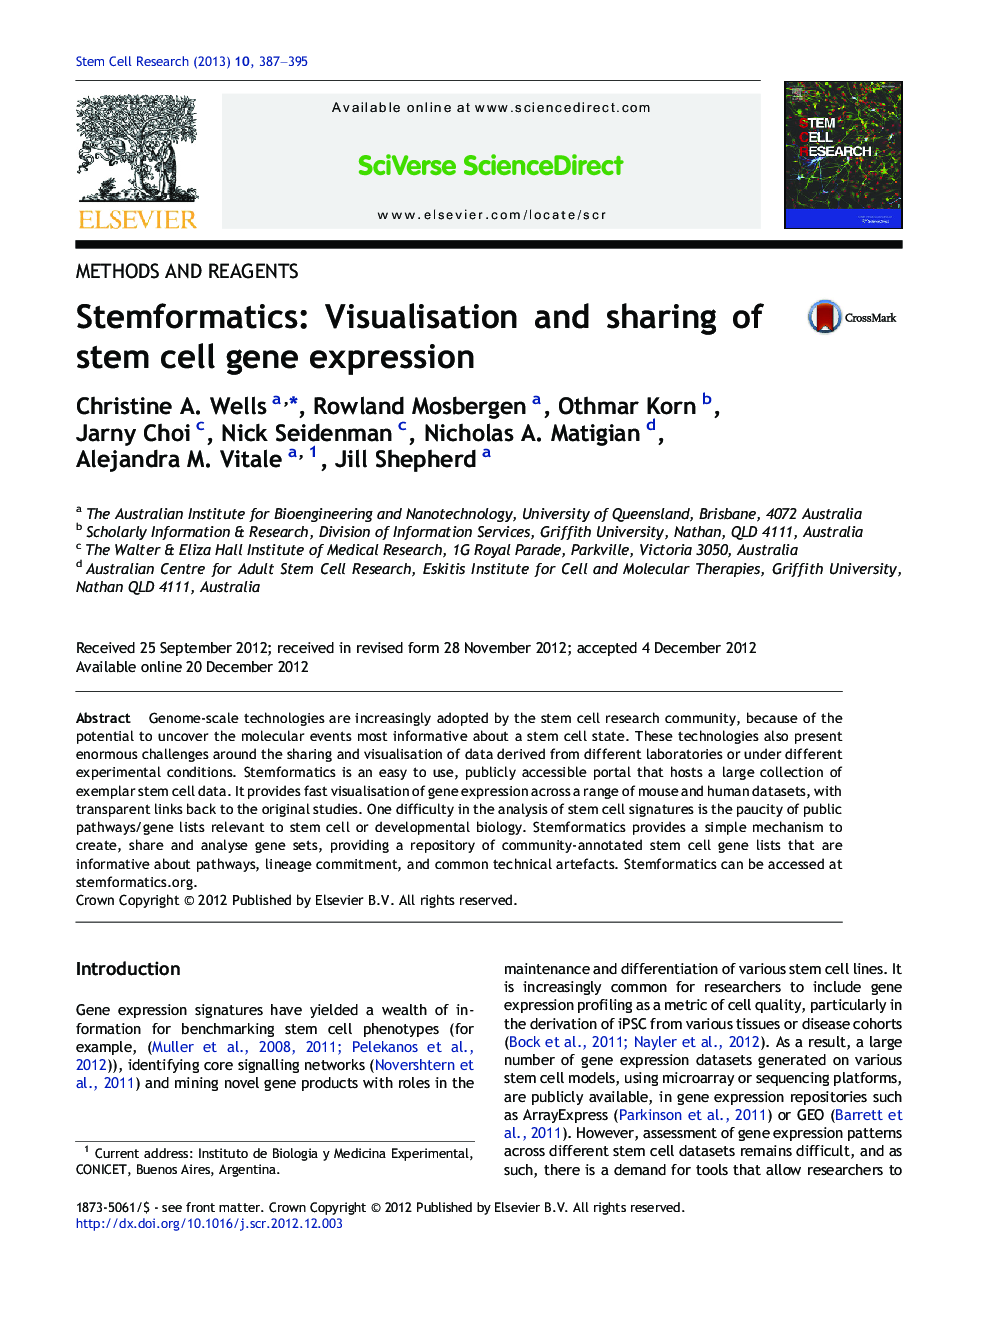 Stemformatics: Visualisation and sharing of stem cell gene expression